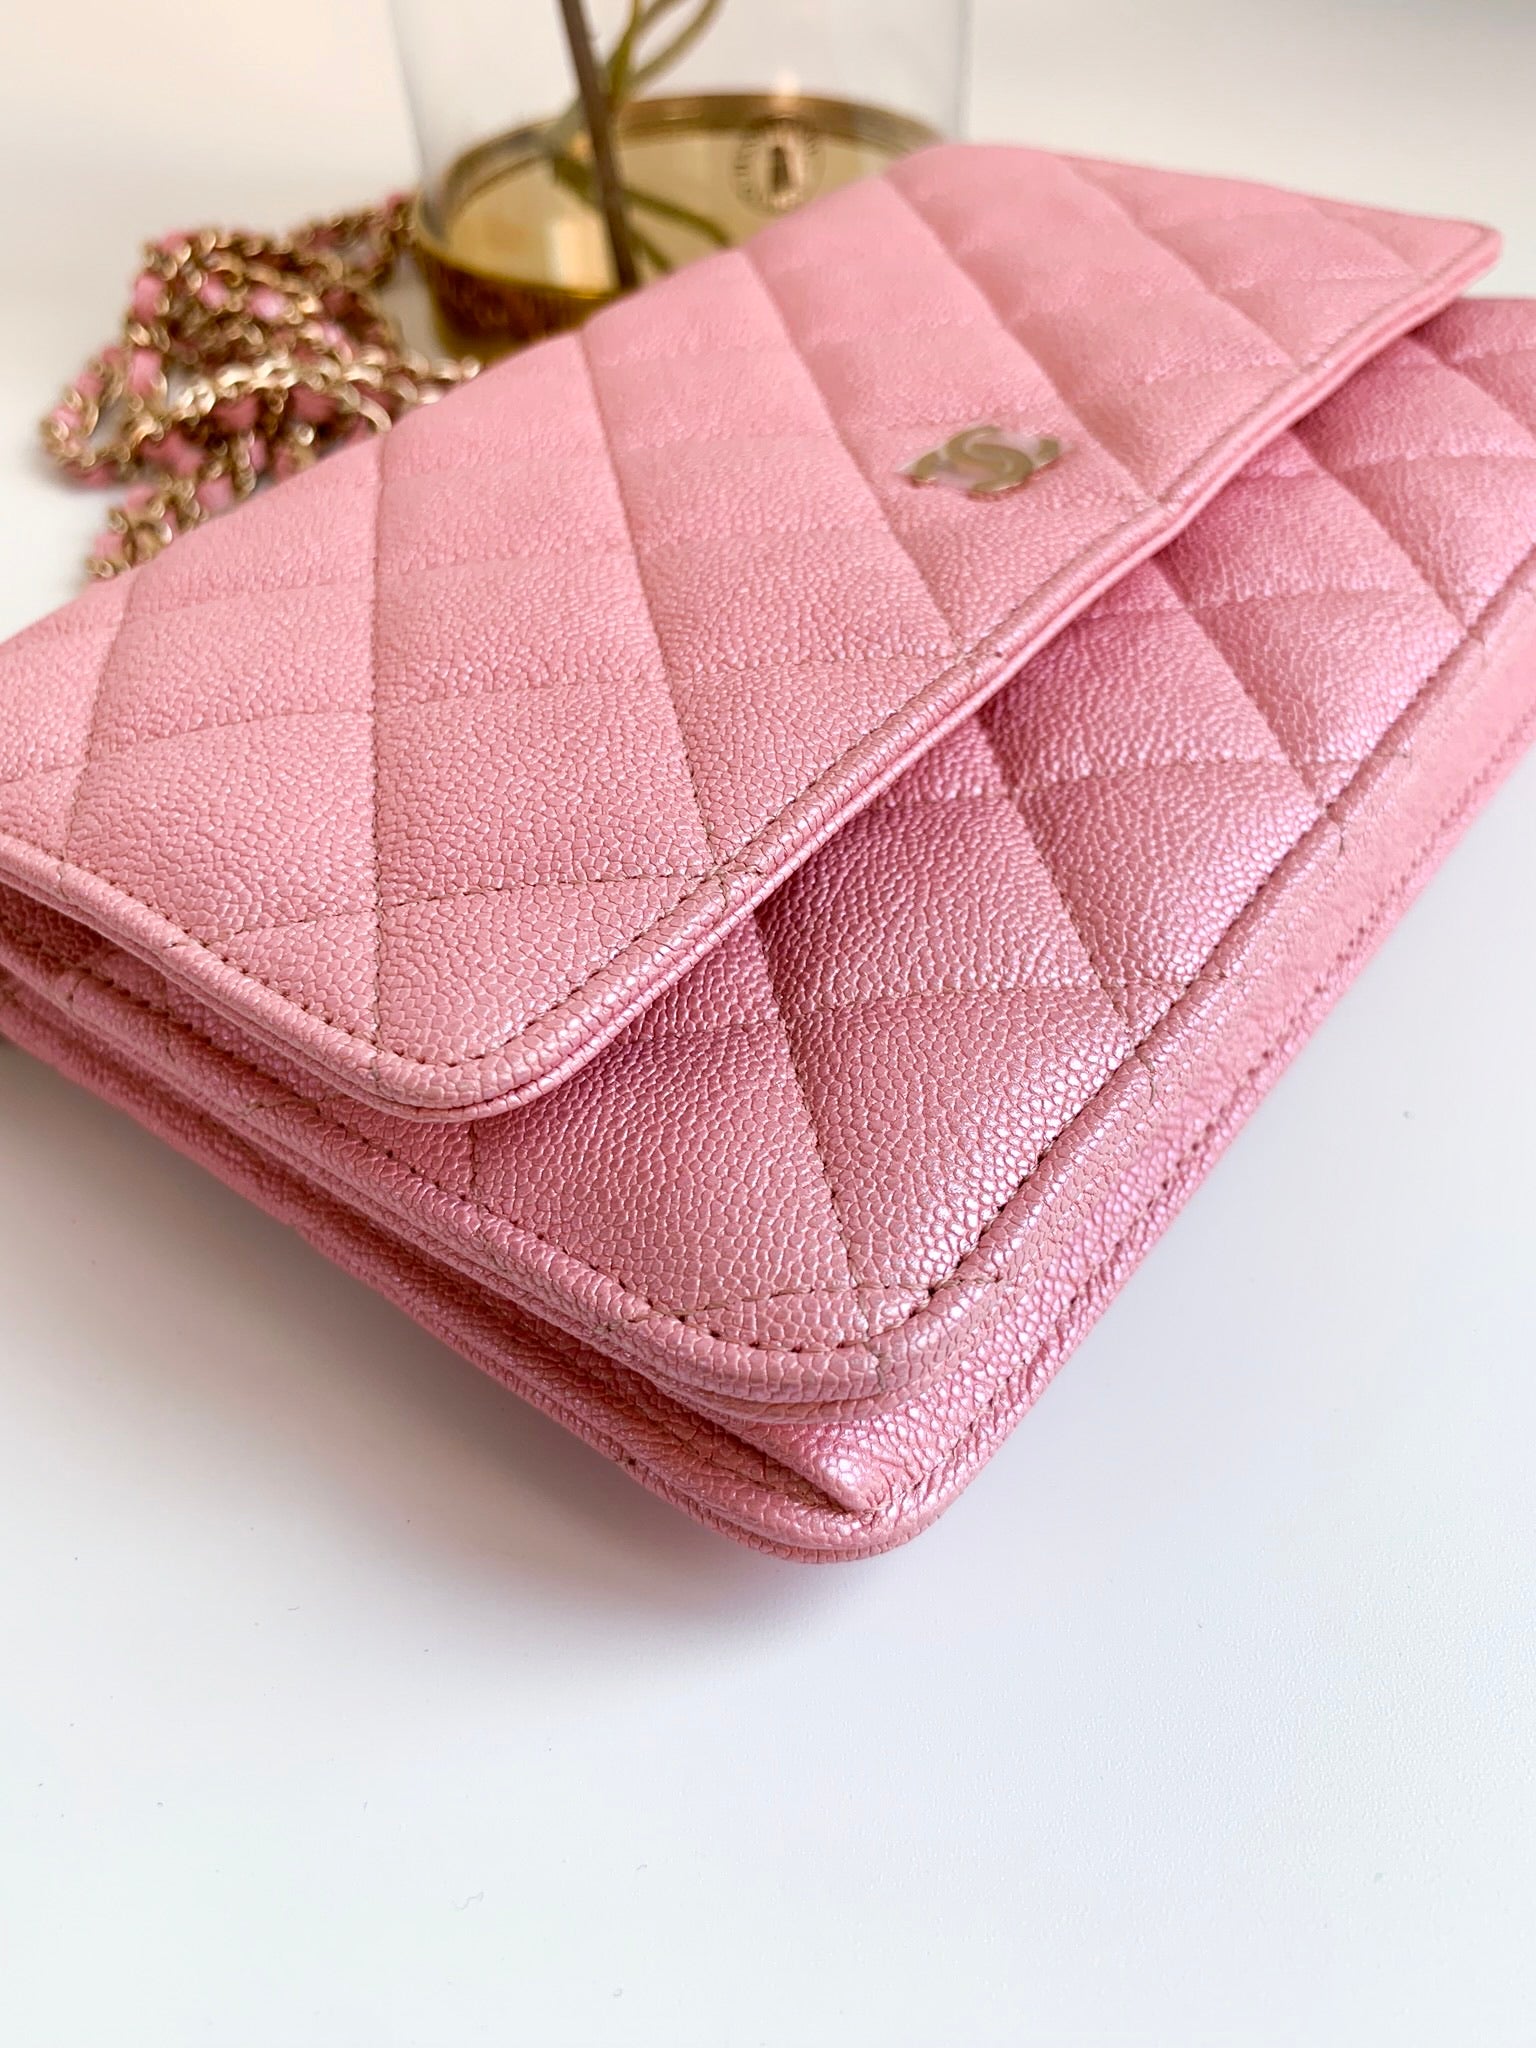 Chanel Wallet On Chain WOC Pink Lambskin Gold Hardware